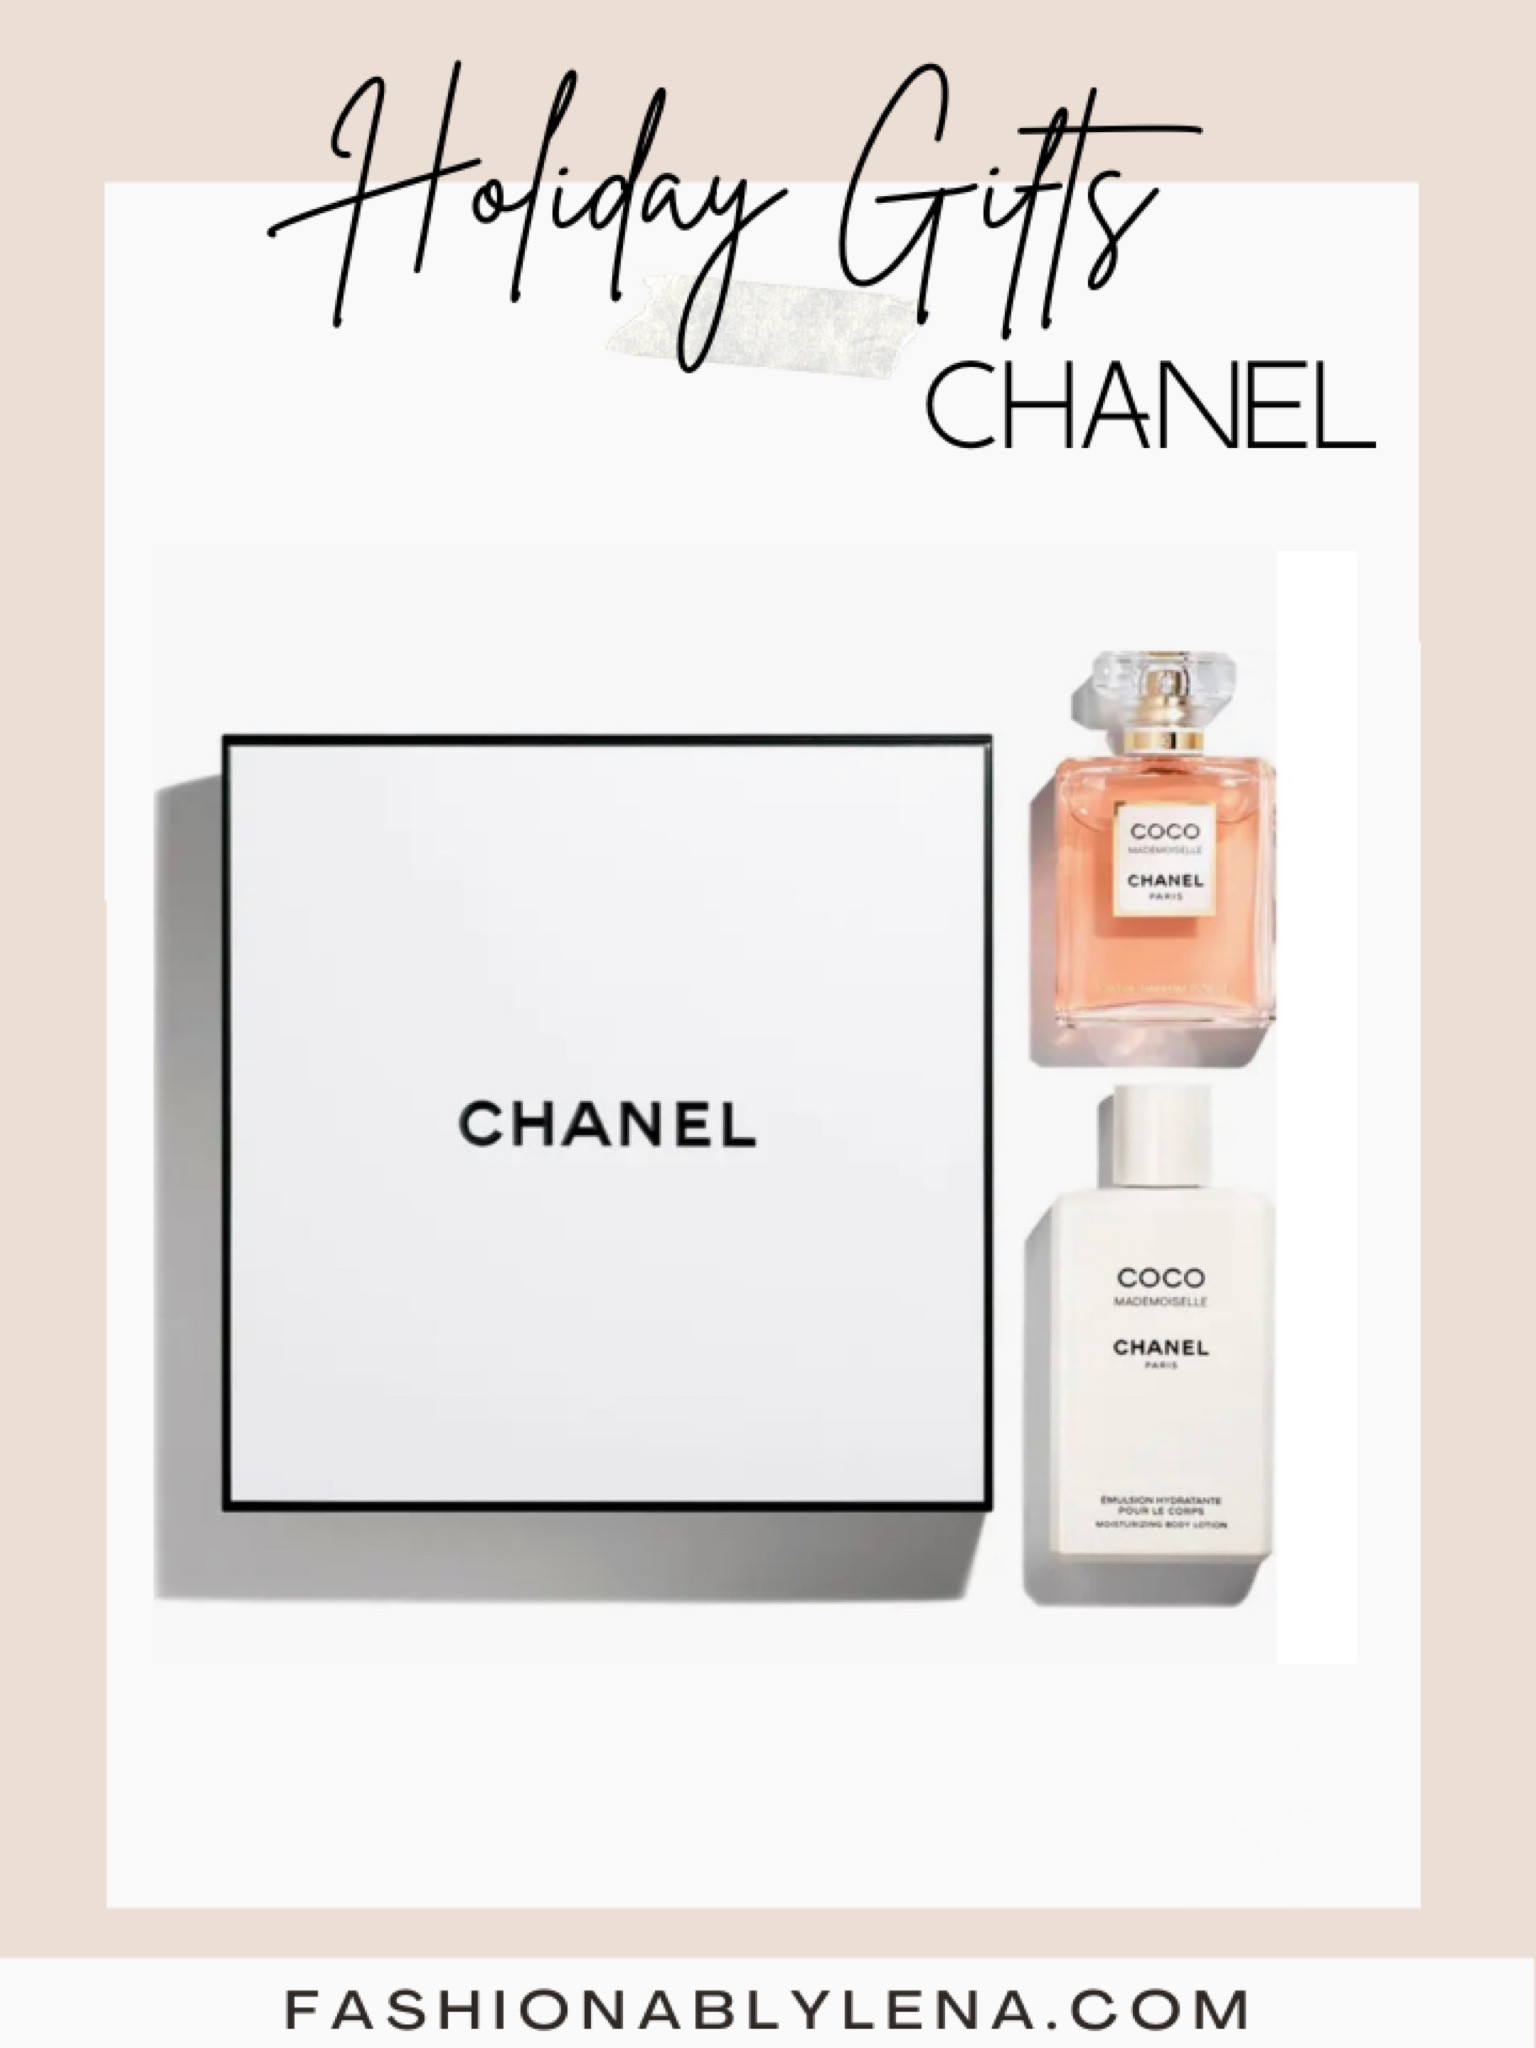 fashionablylena's Chanel Sets Gift Guide on LTK